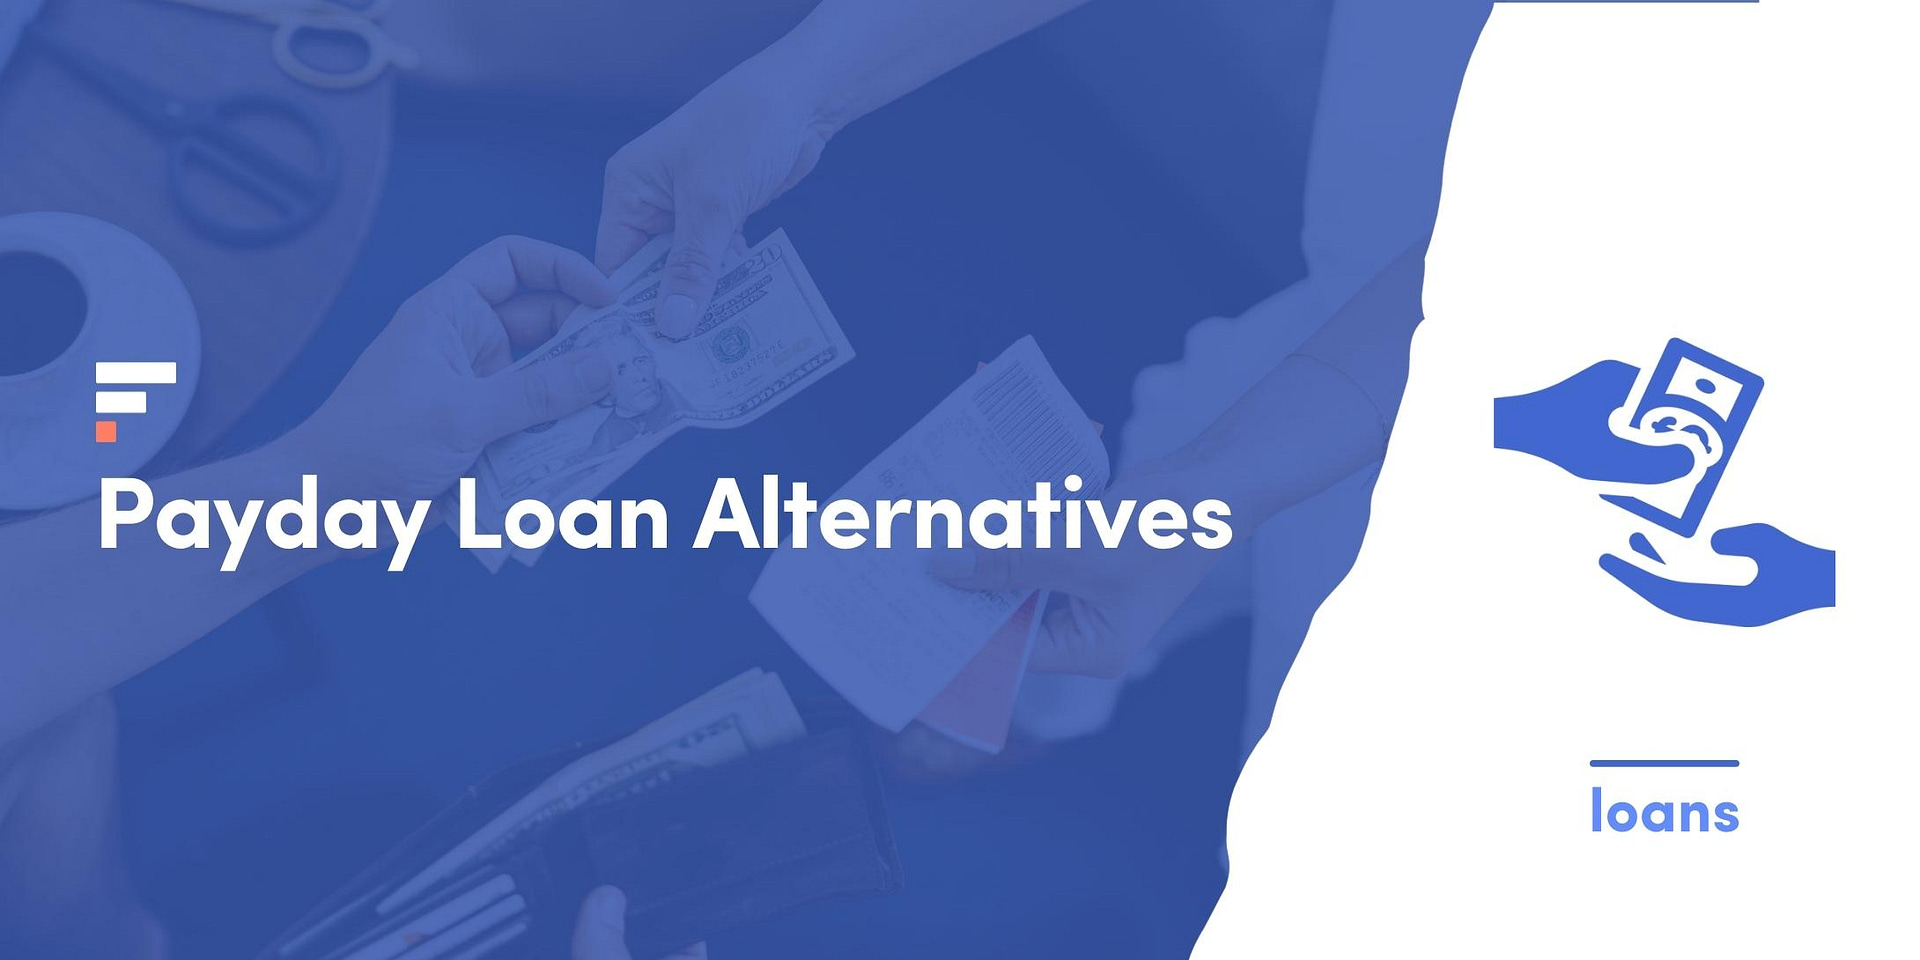 Payday loan alternative companies